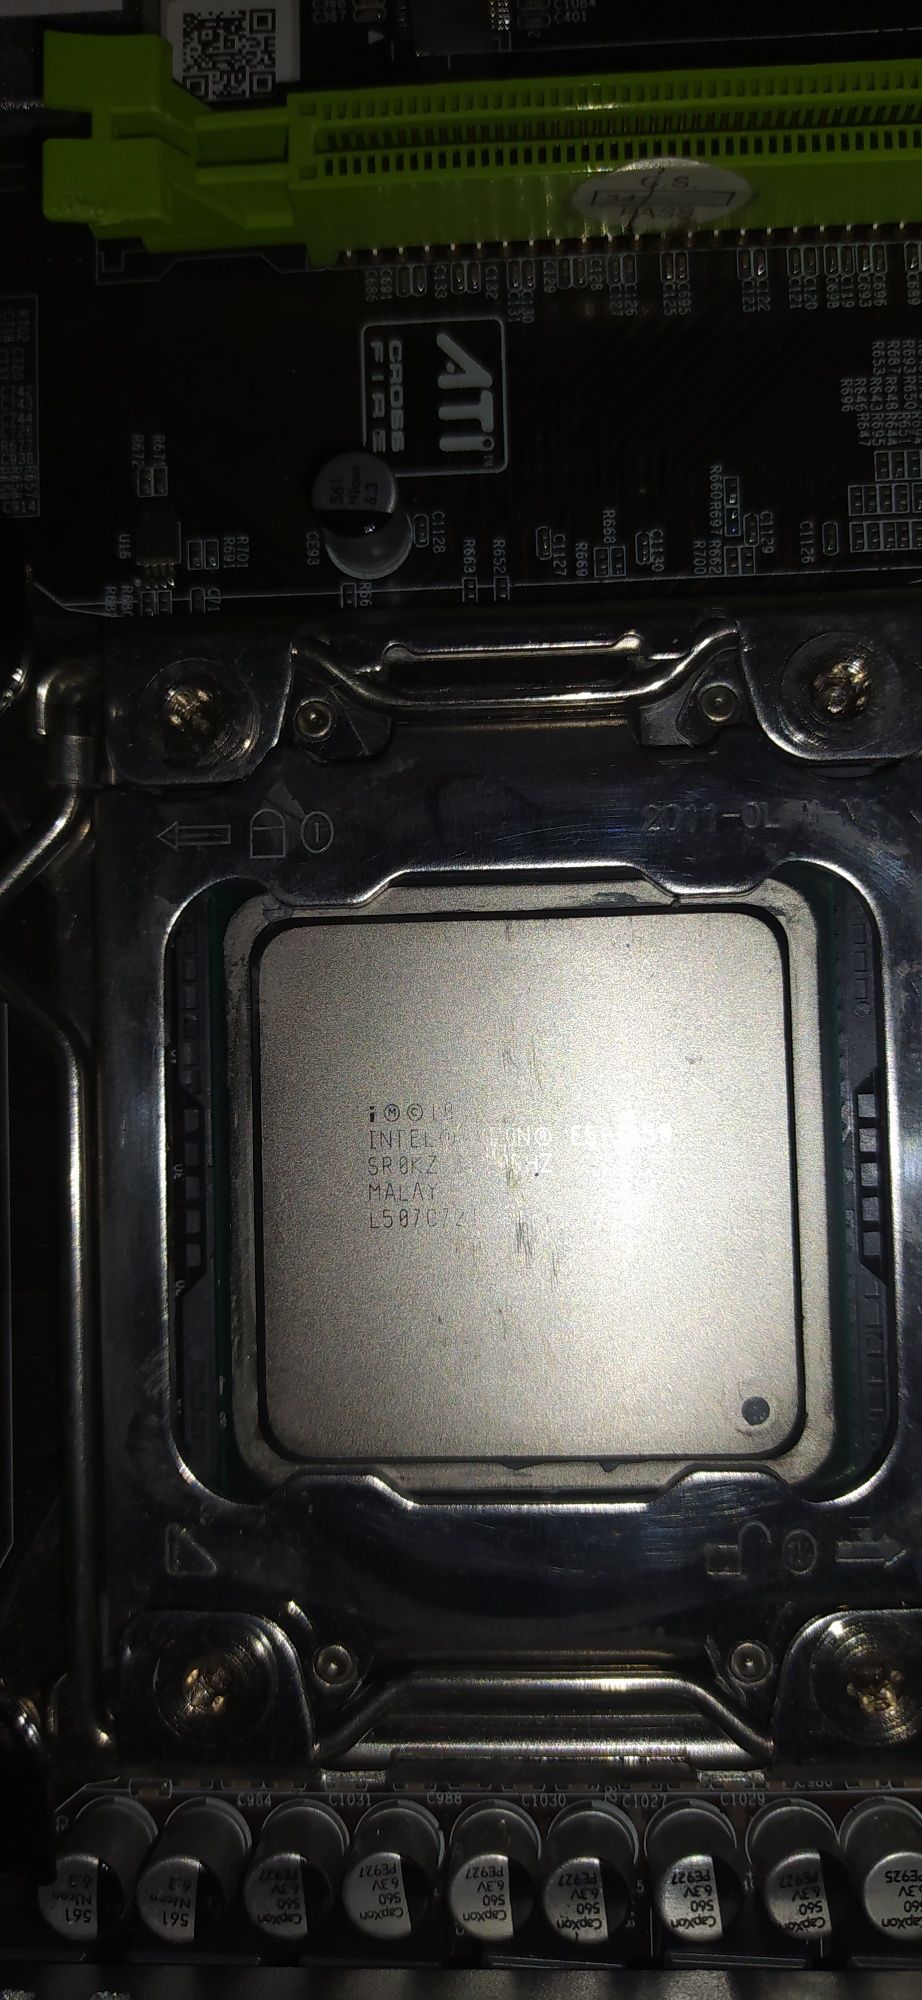 Процесор Intel Xeon e5 1650 lga 2011